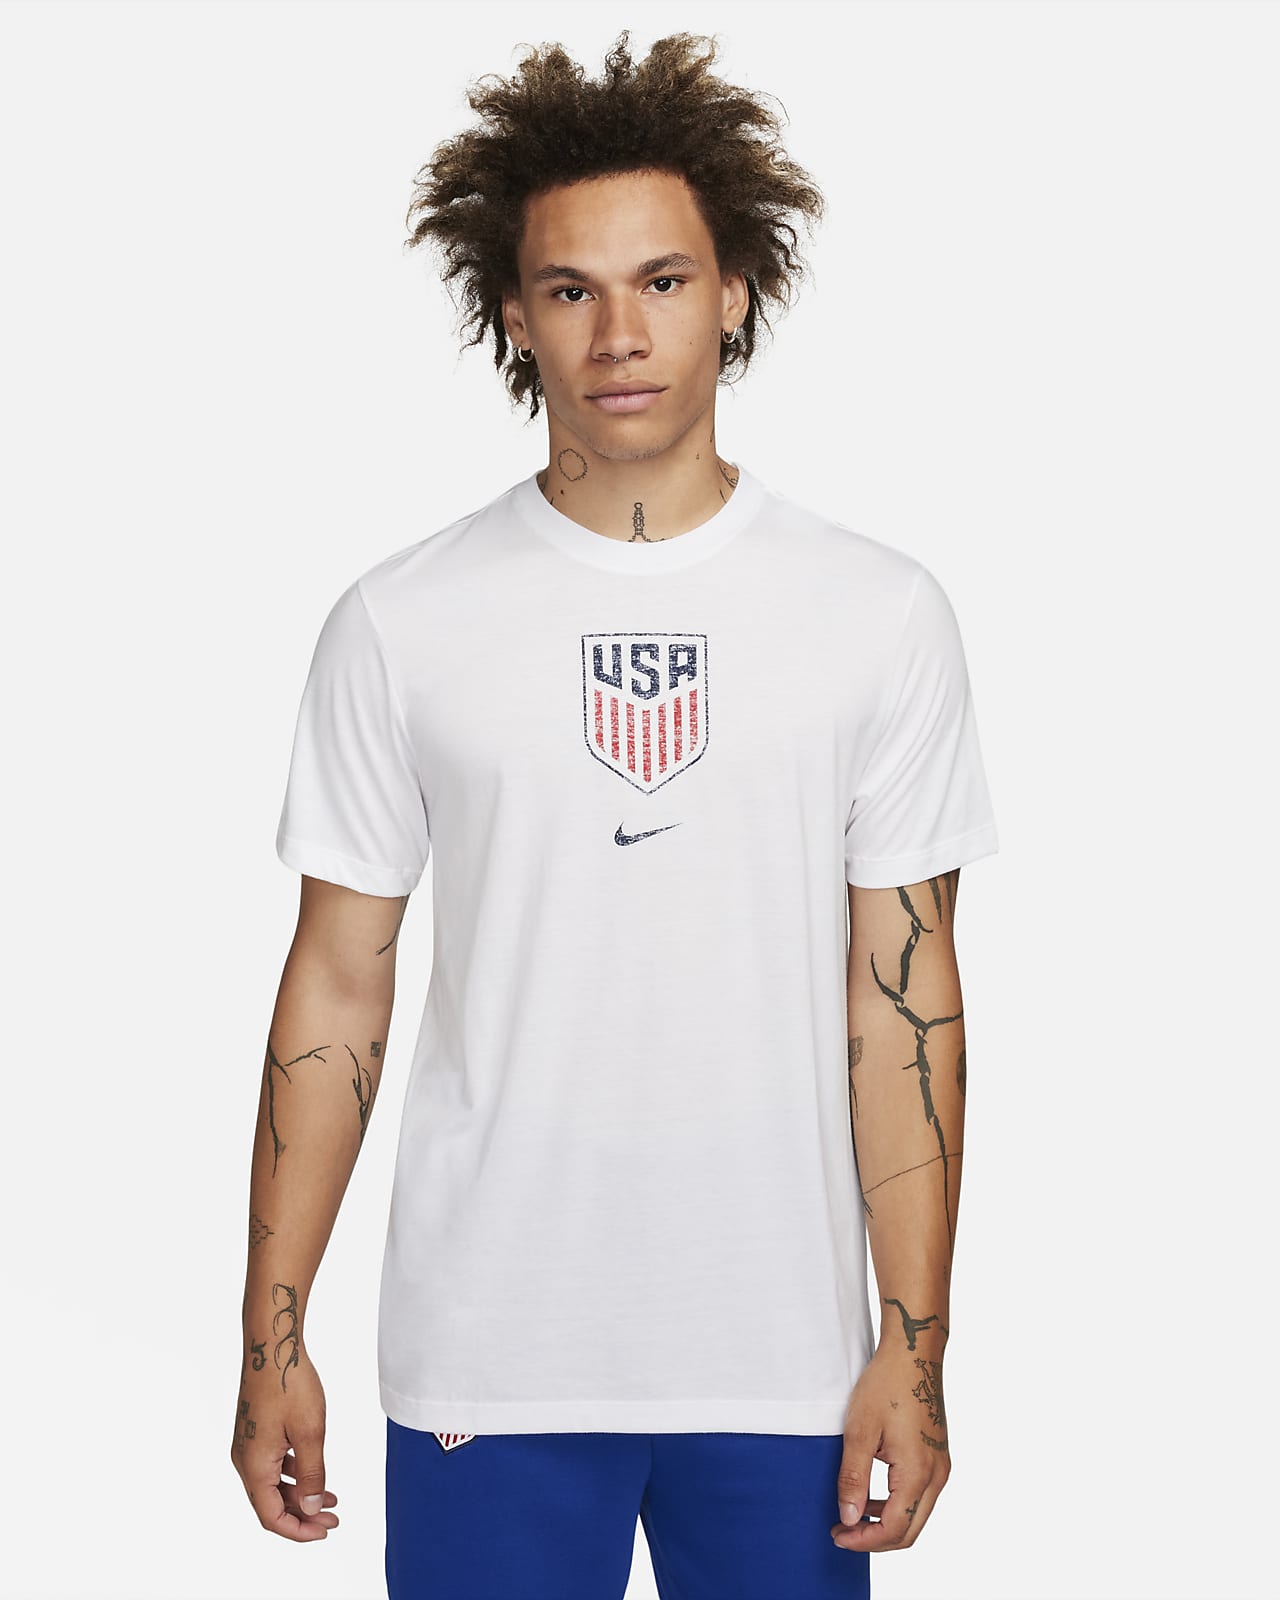 Mooie jurk Verborgen matig U.S. Retro Crest Men's Nike Soccer T-Shirt. Nike.com